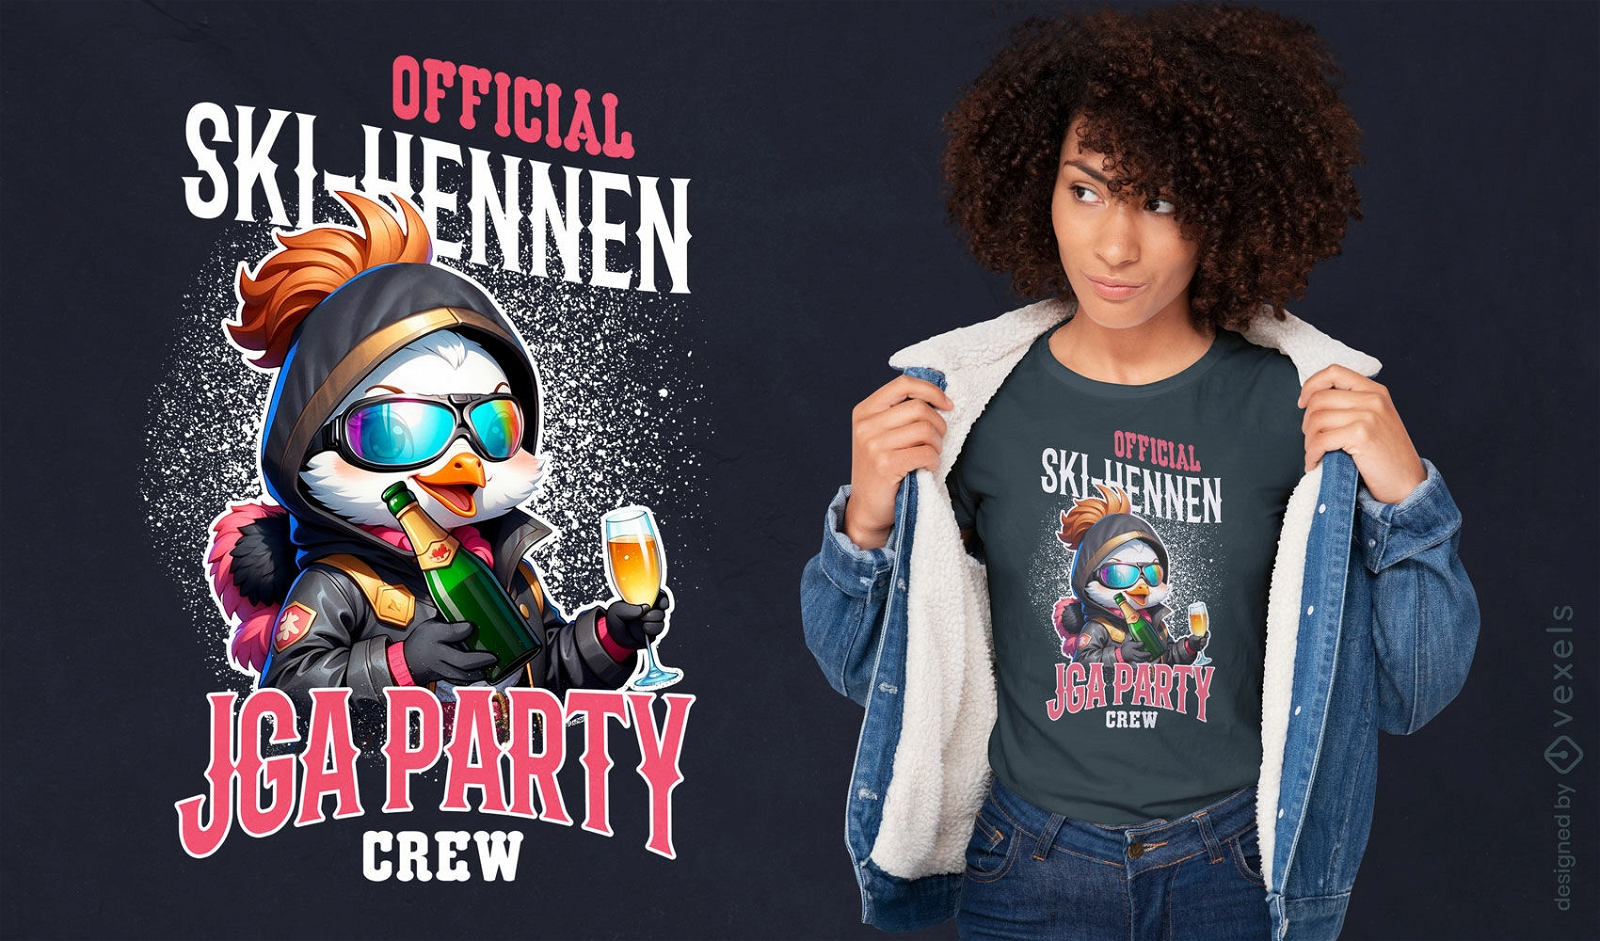 Ski party quote t-shirt design